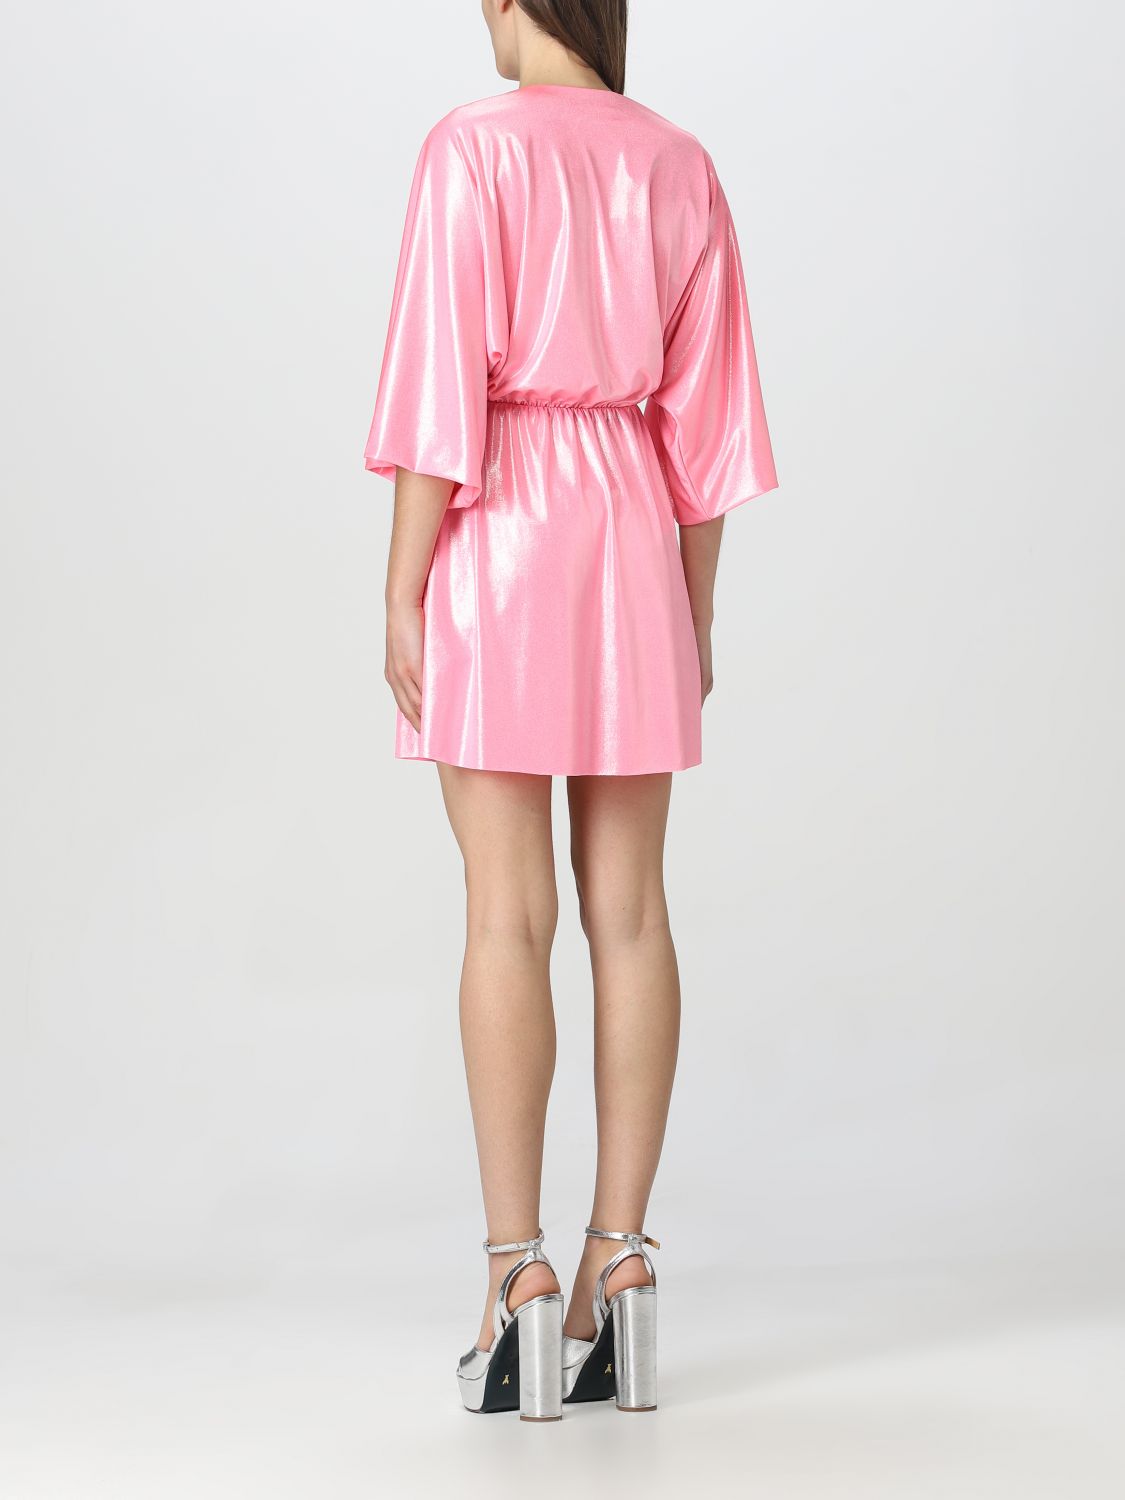 Vestido Aniye By: Vestido Aniye By para mujer rosa 2